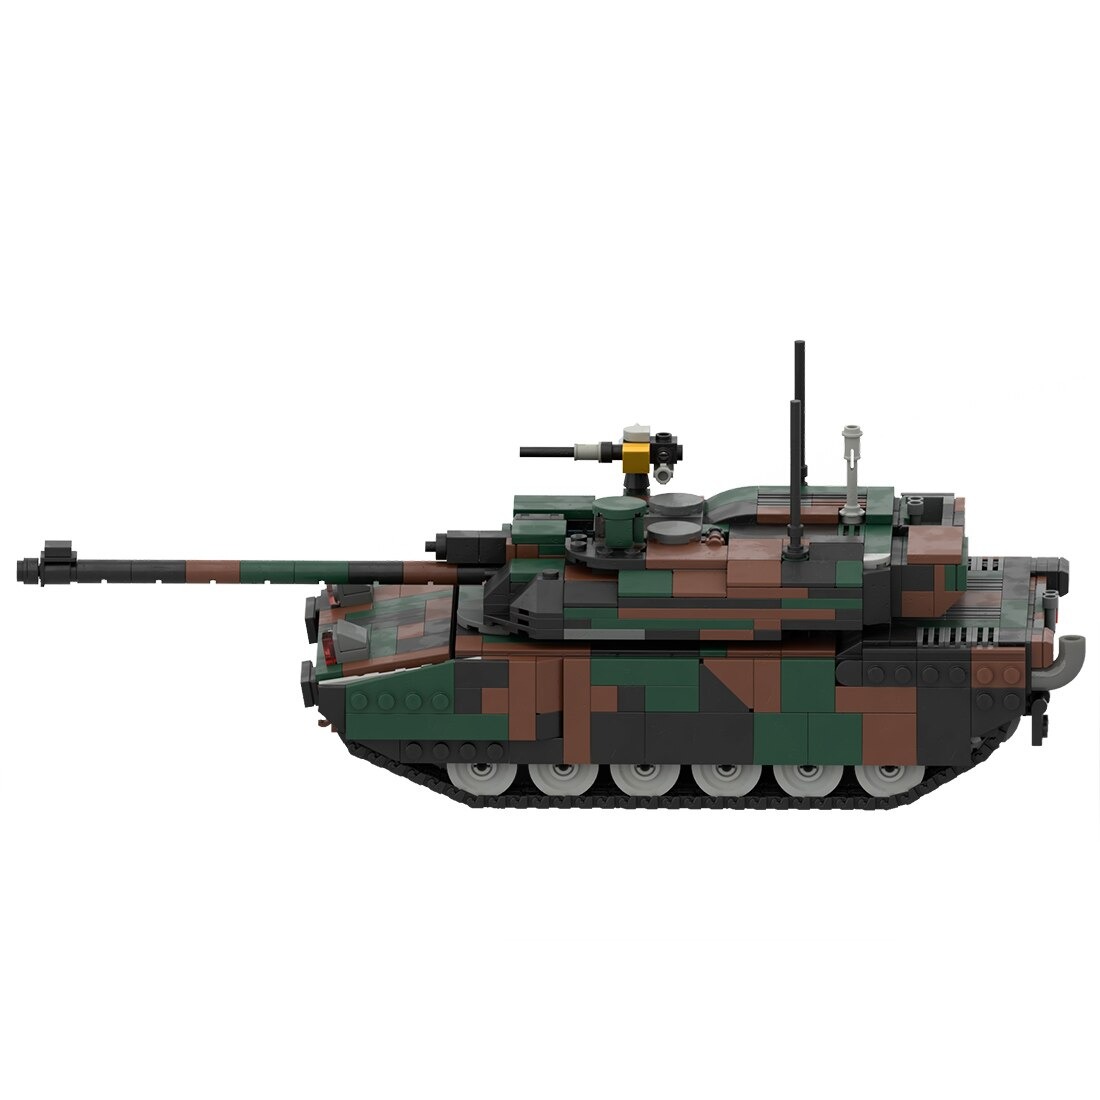 moc 34858 leclerc main battle tank model main 3 - KAZI Block